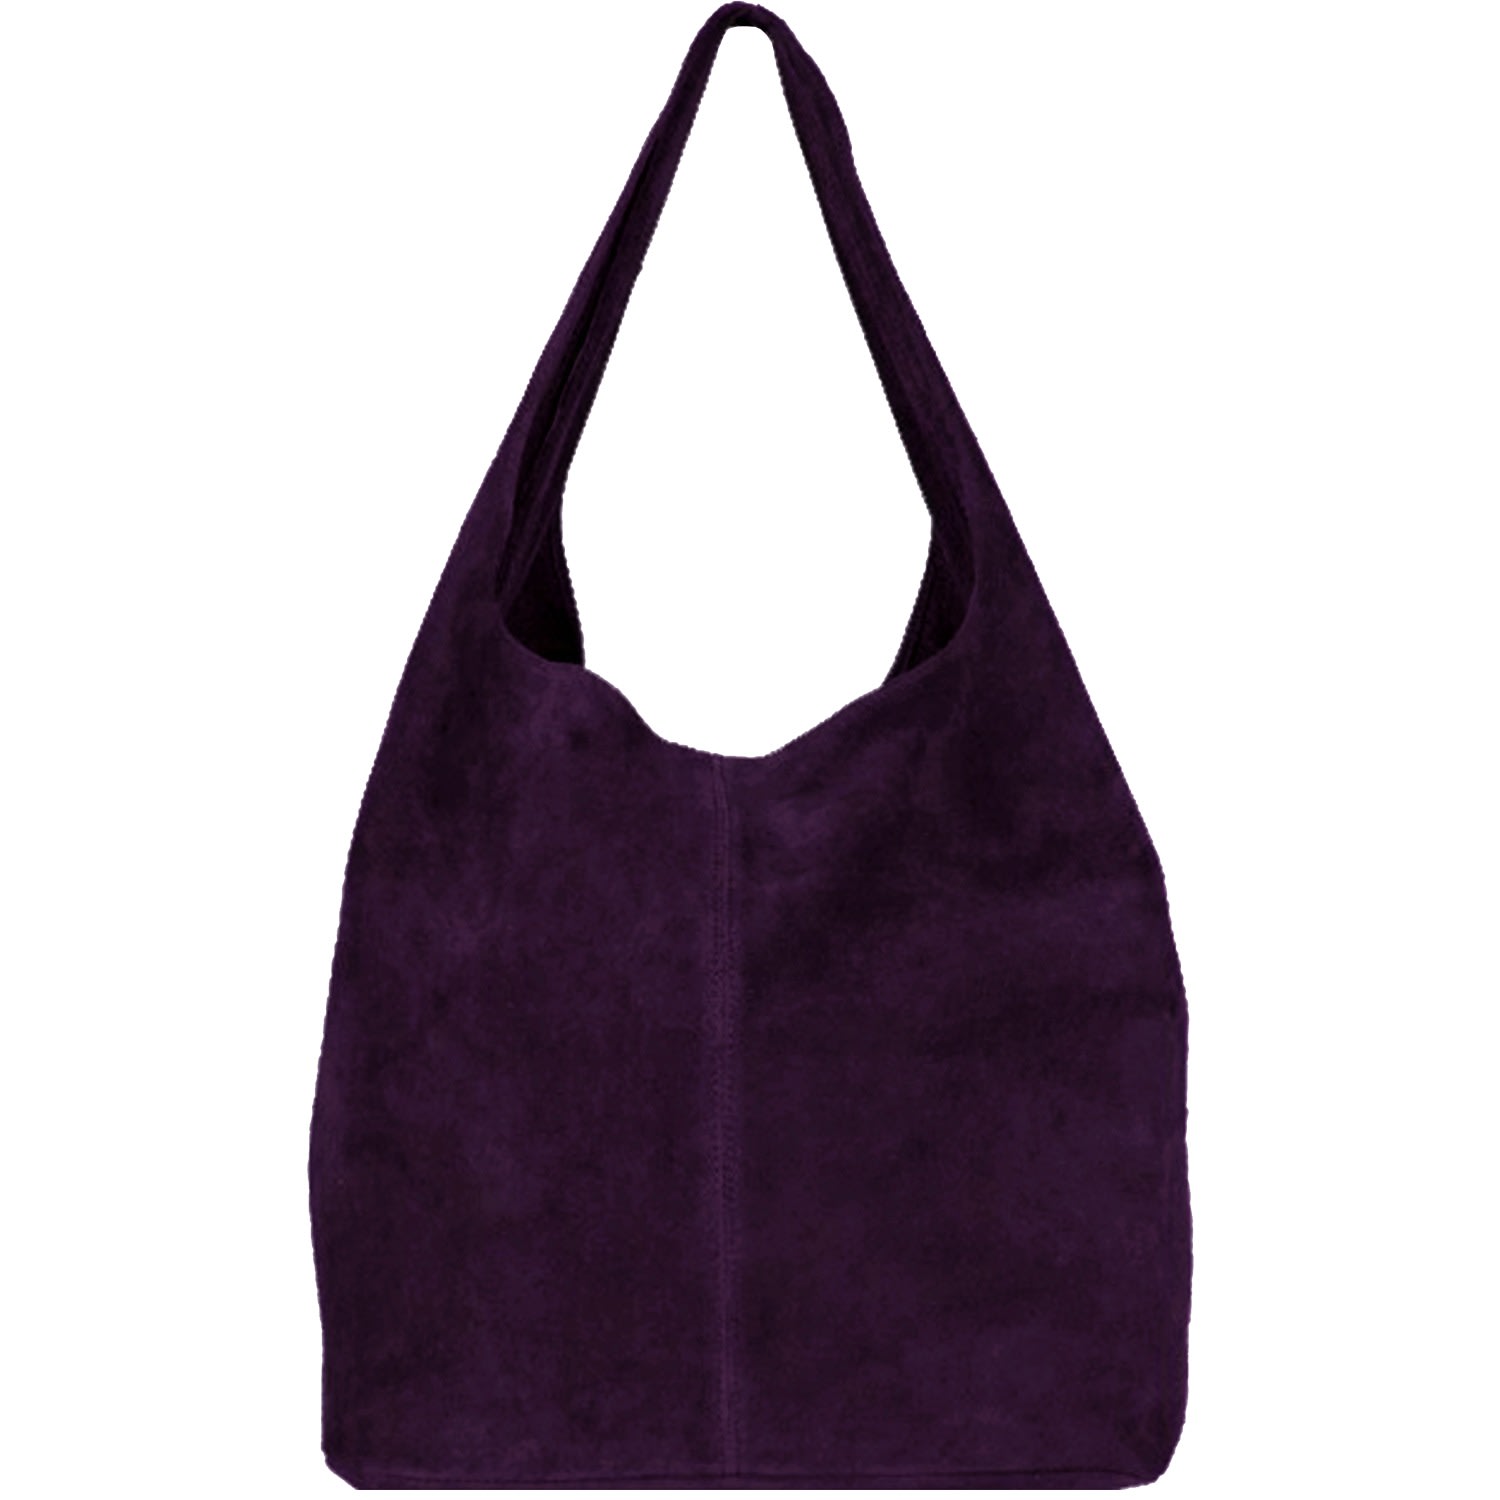 Brix + Bailey Women's Pink / Purple Purple Suede Leather Hobo Boho Shoulder Bag